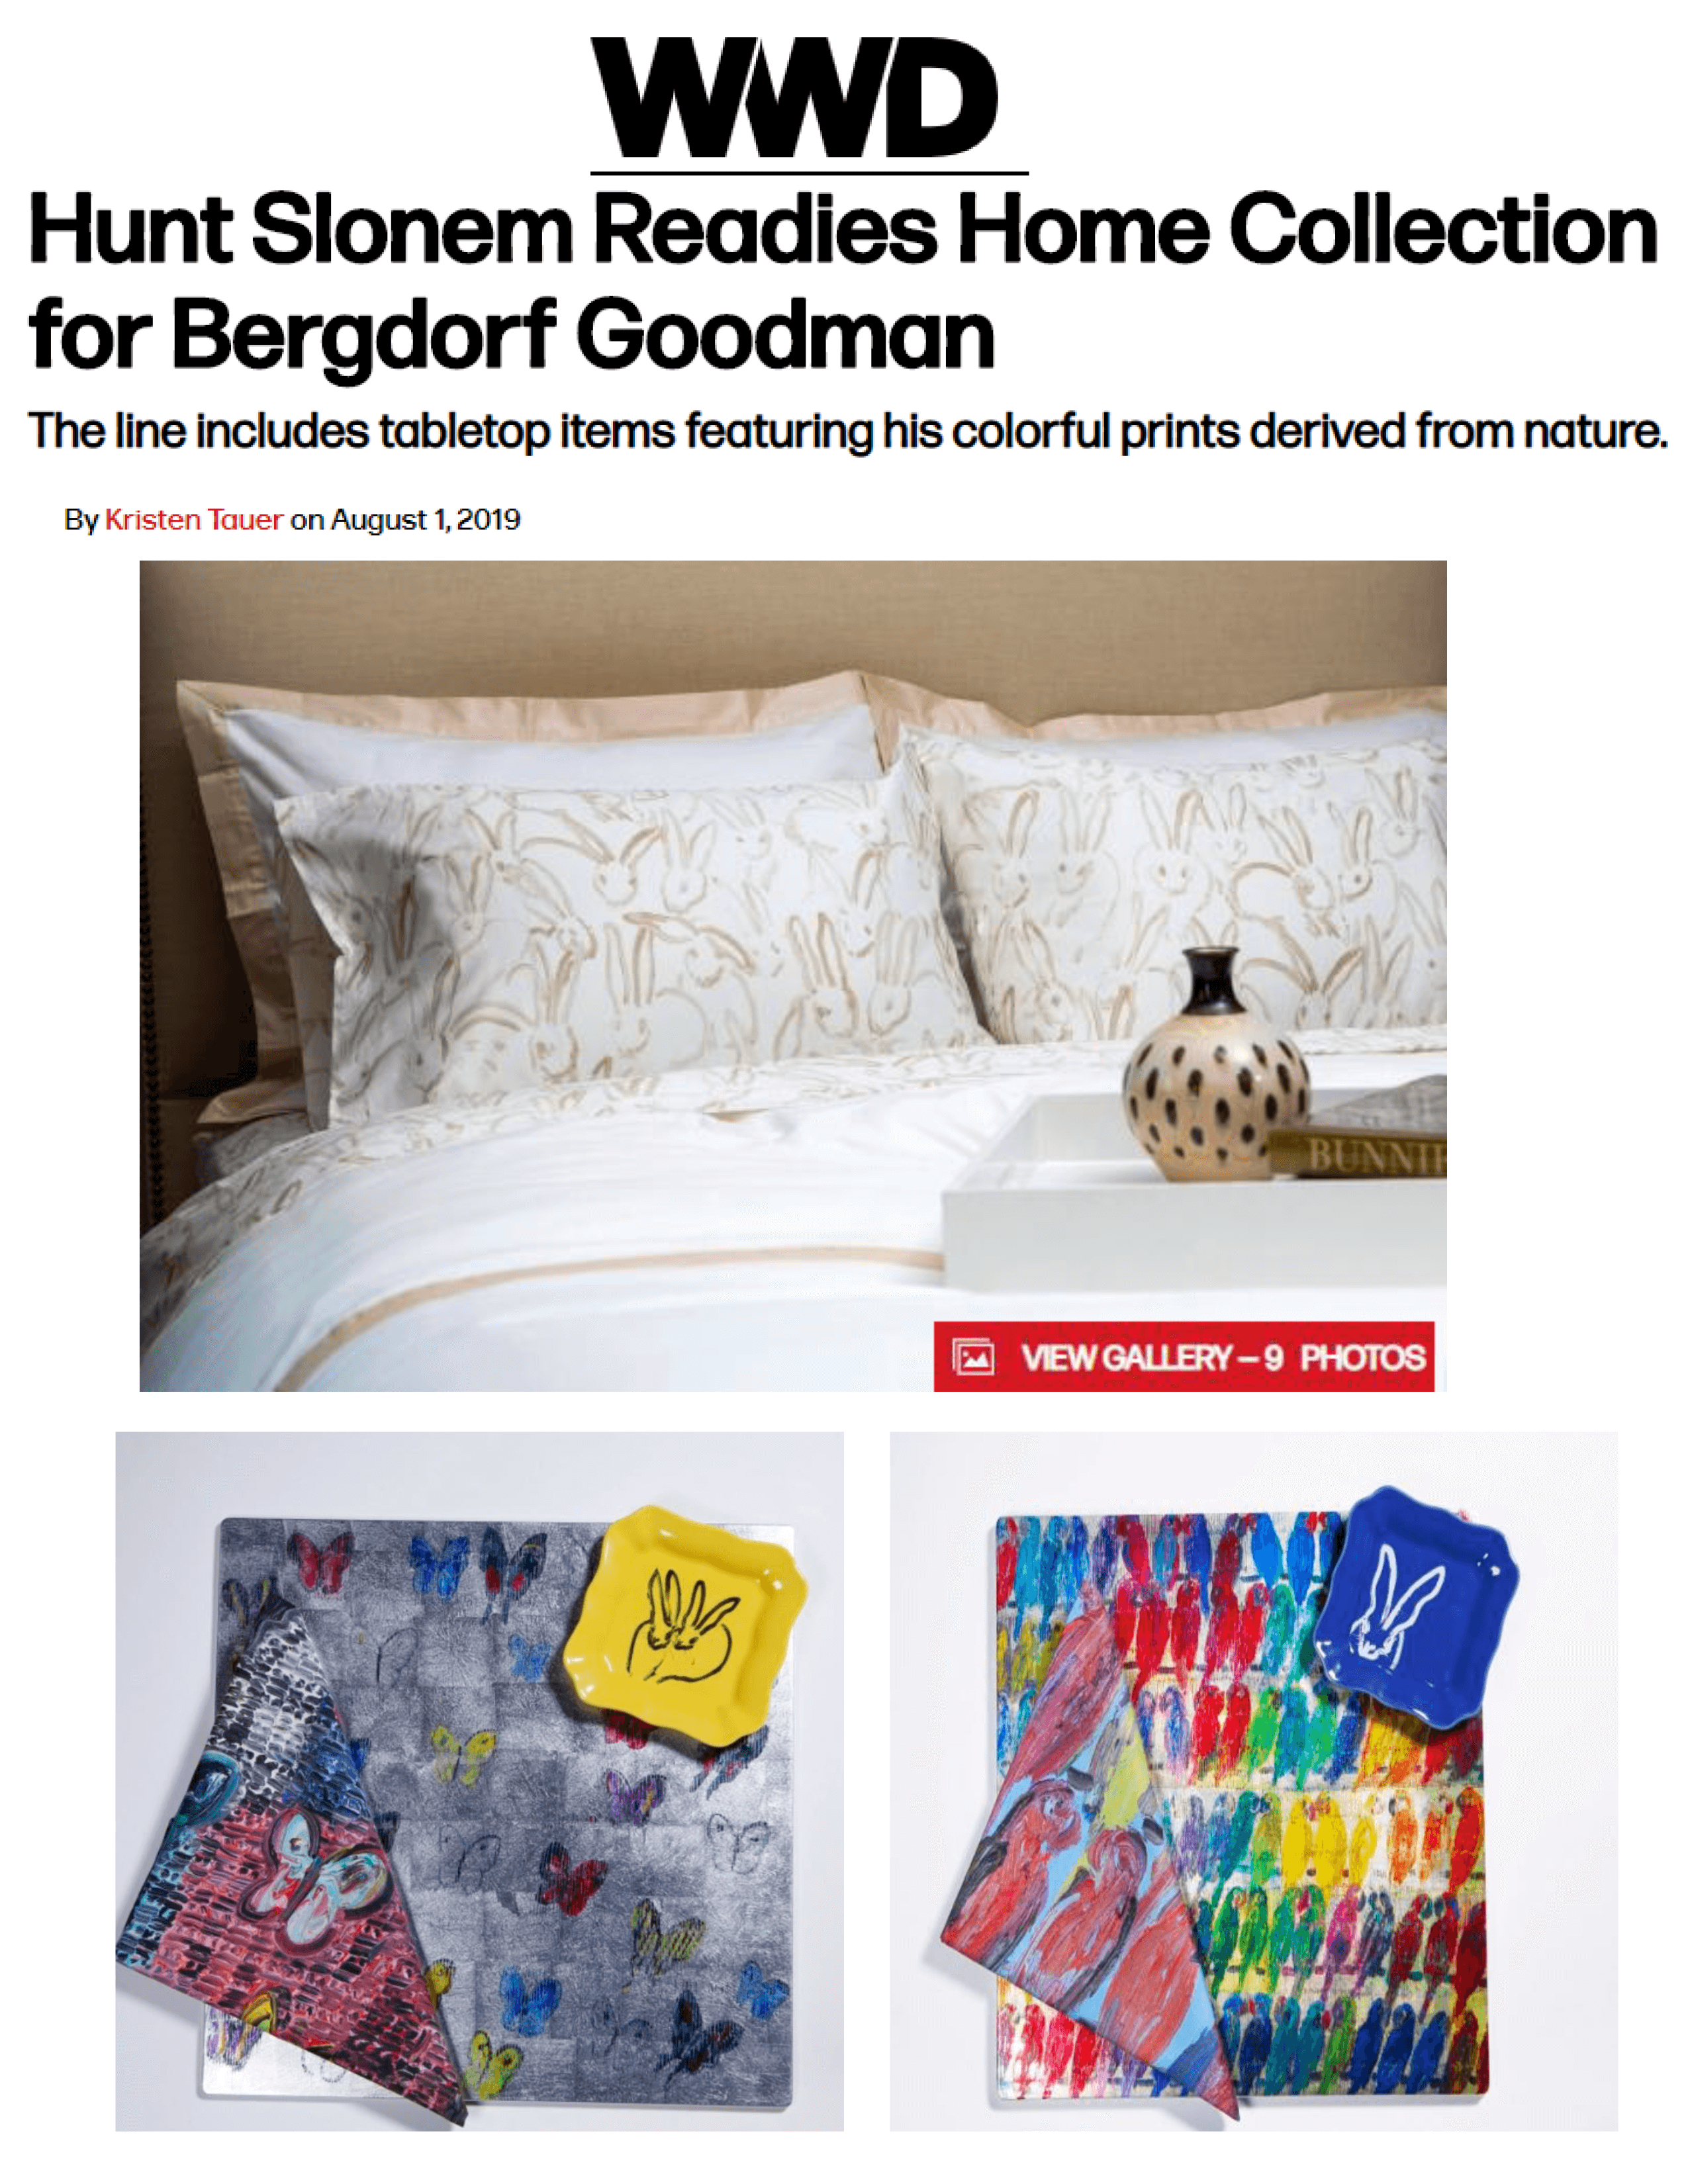 Hunt Slonem Home Collection for Bergdorf Goodman